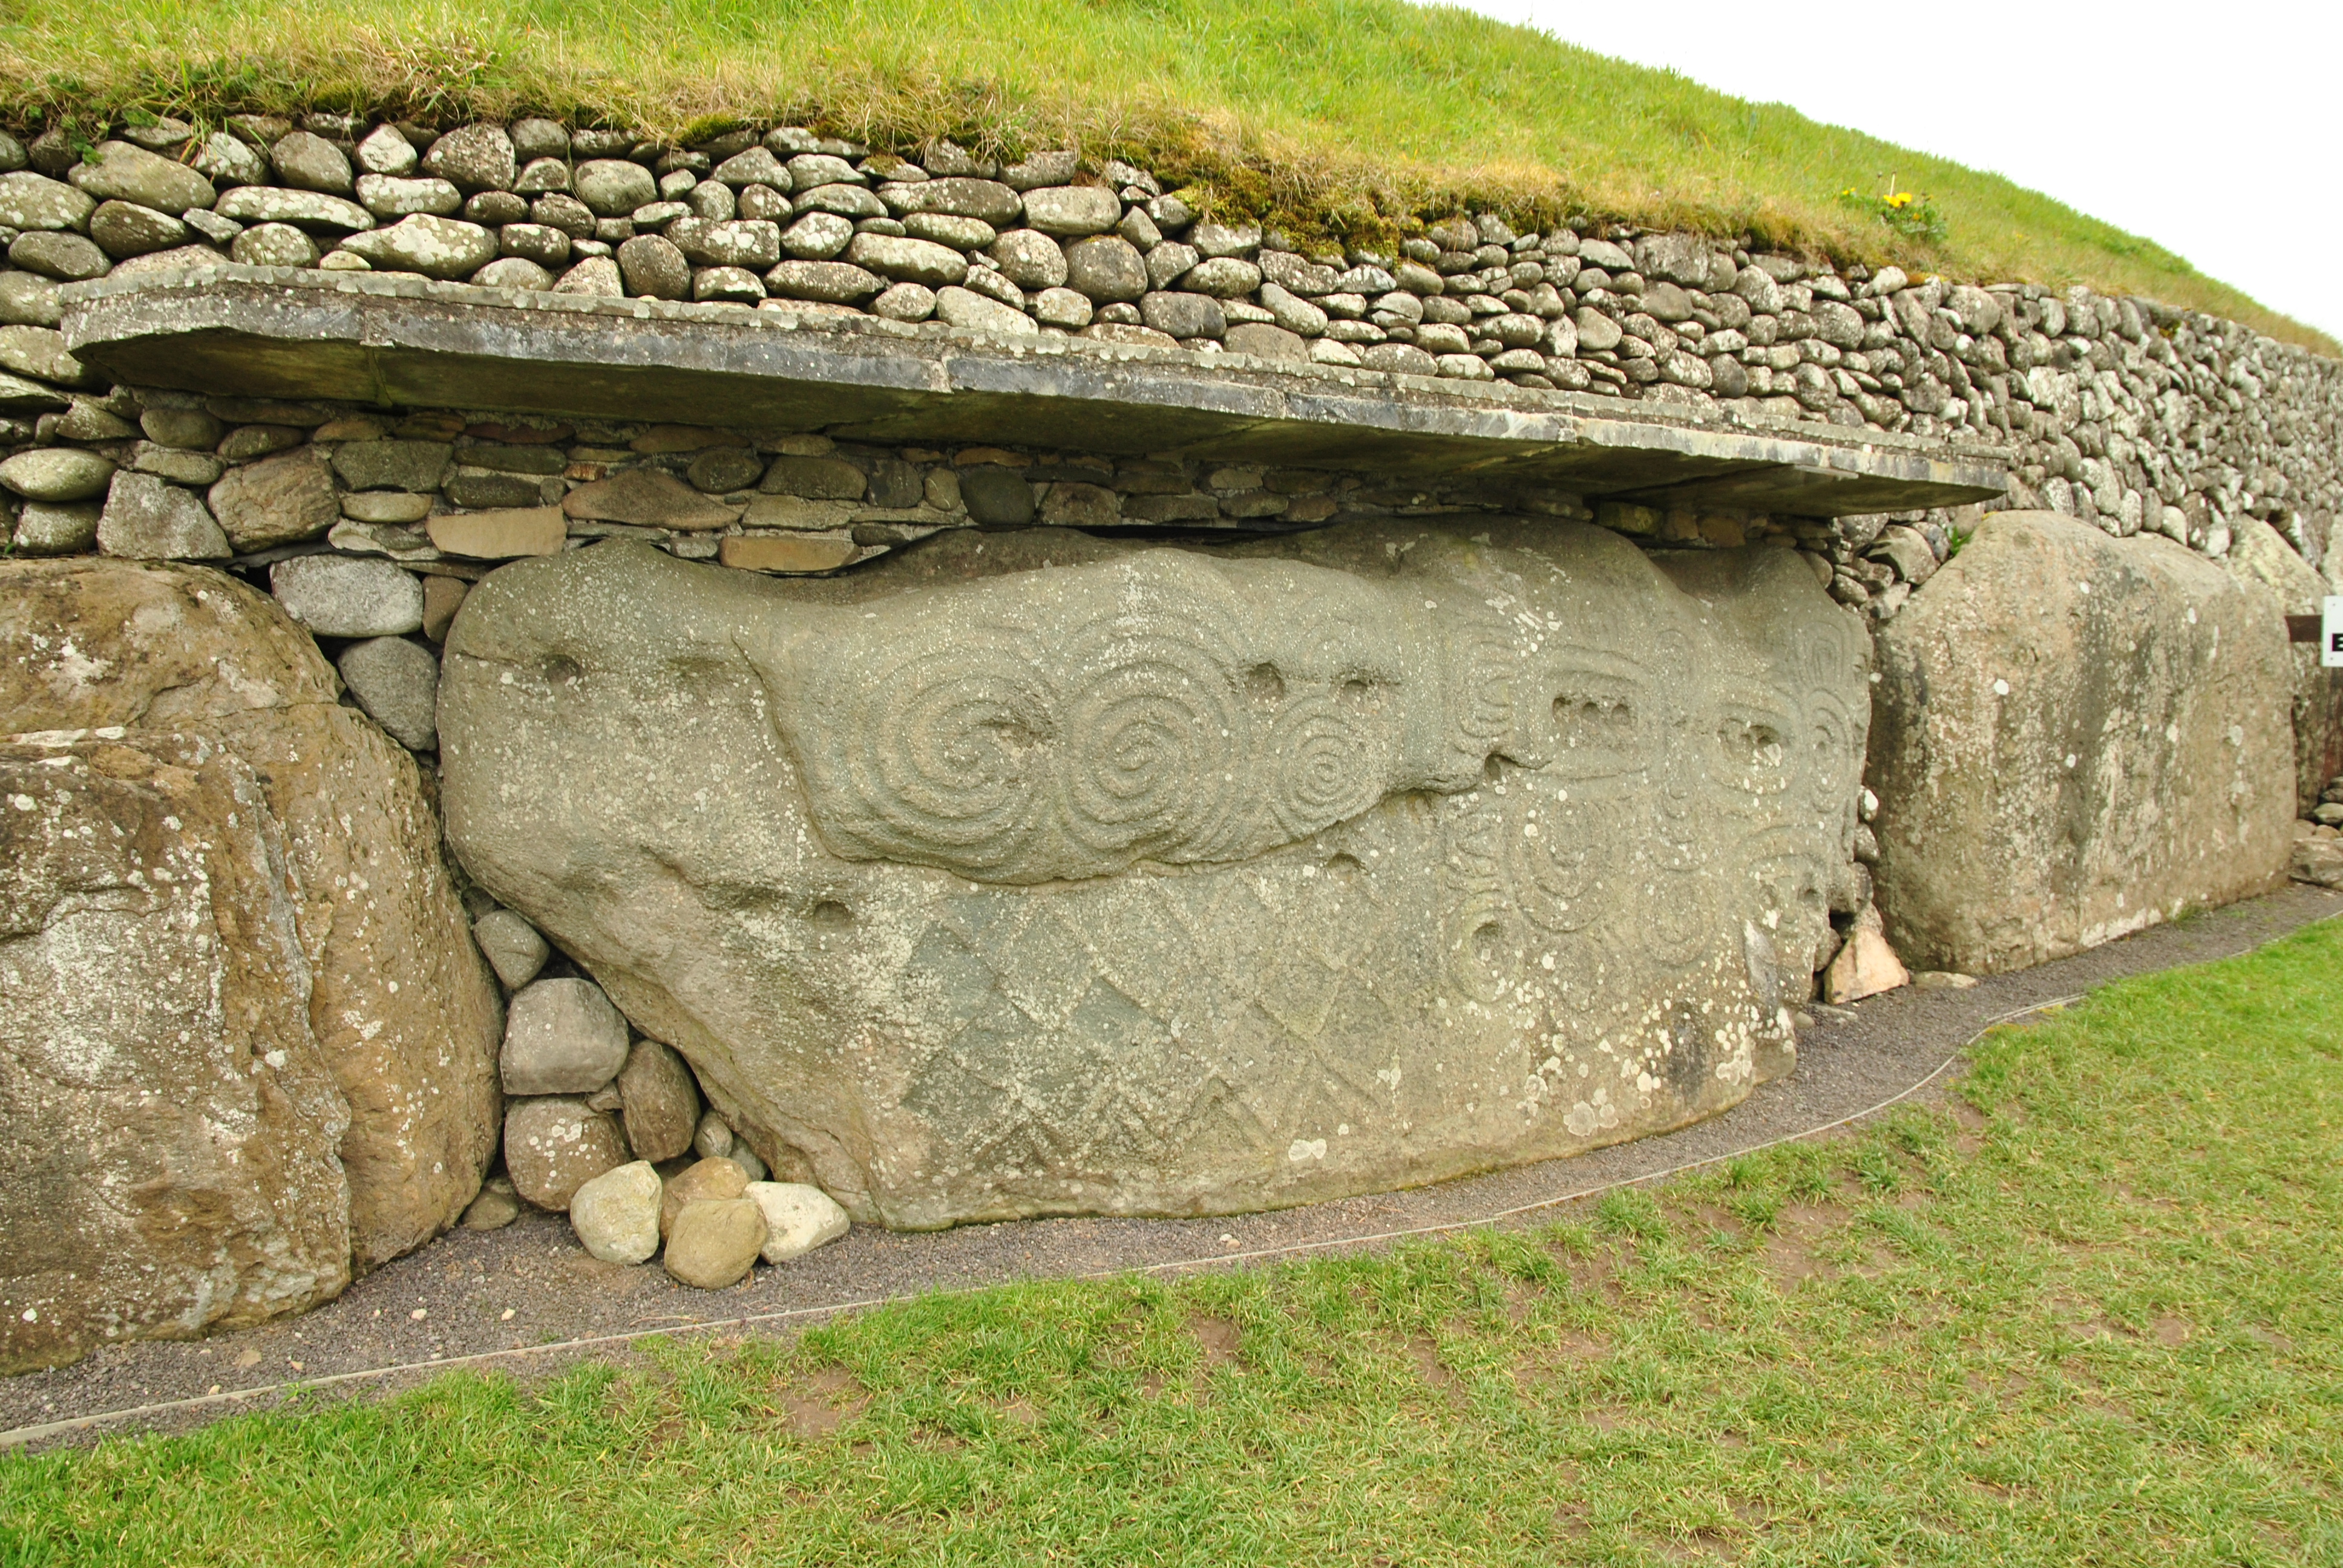 Newgrange Stone Age Passage Tomb - Boyne Valley, Ireland (6961303714).jpg